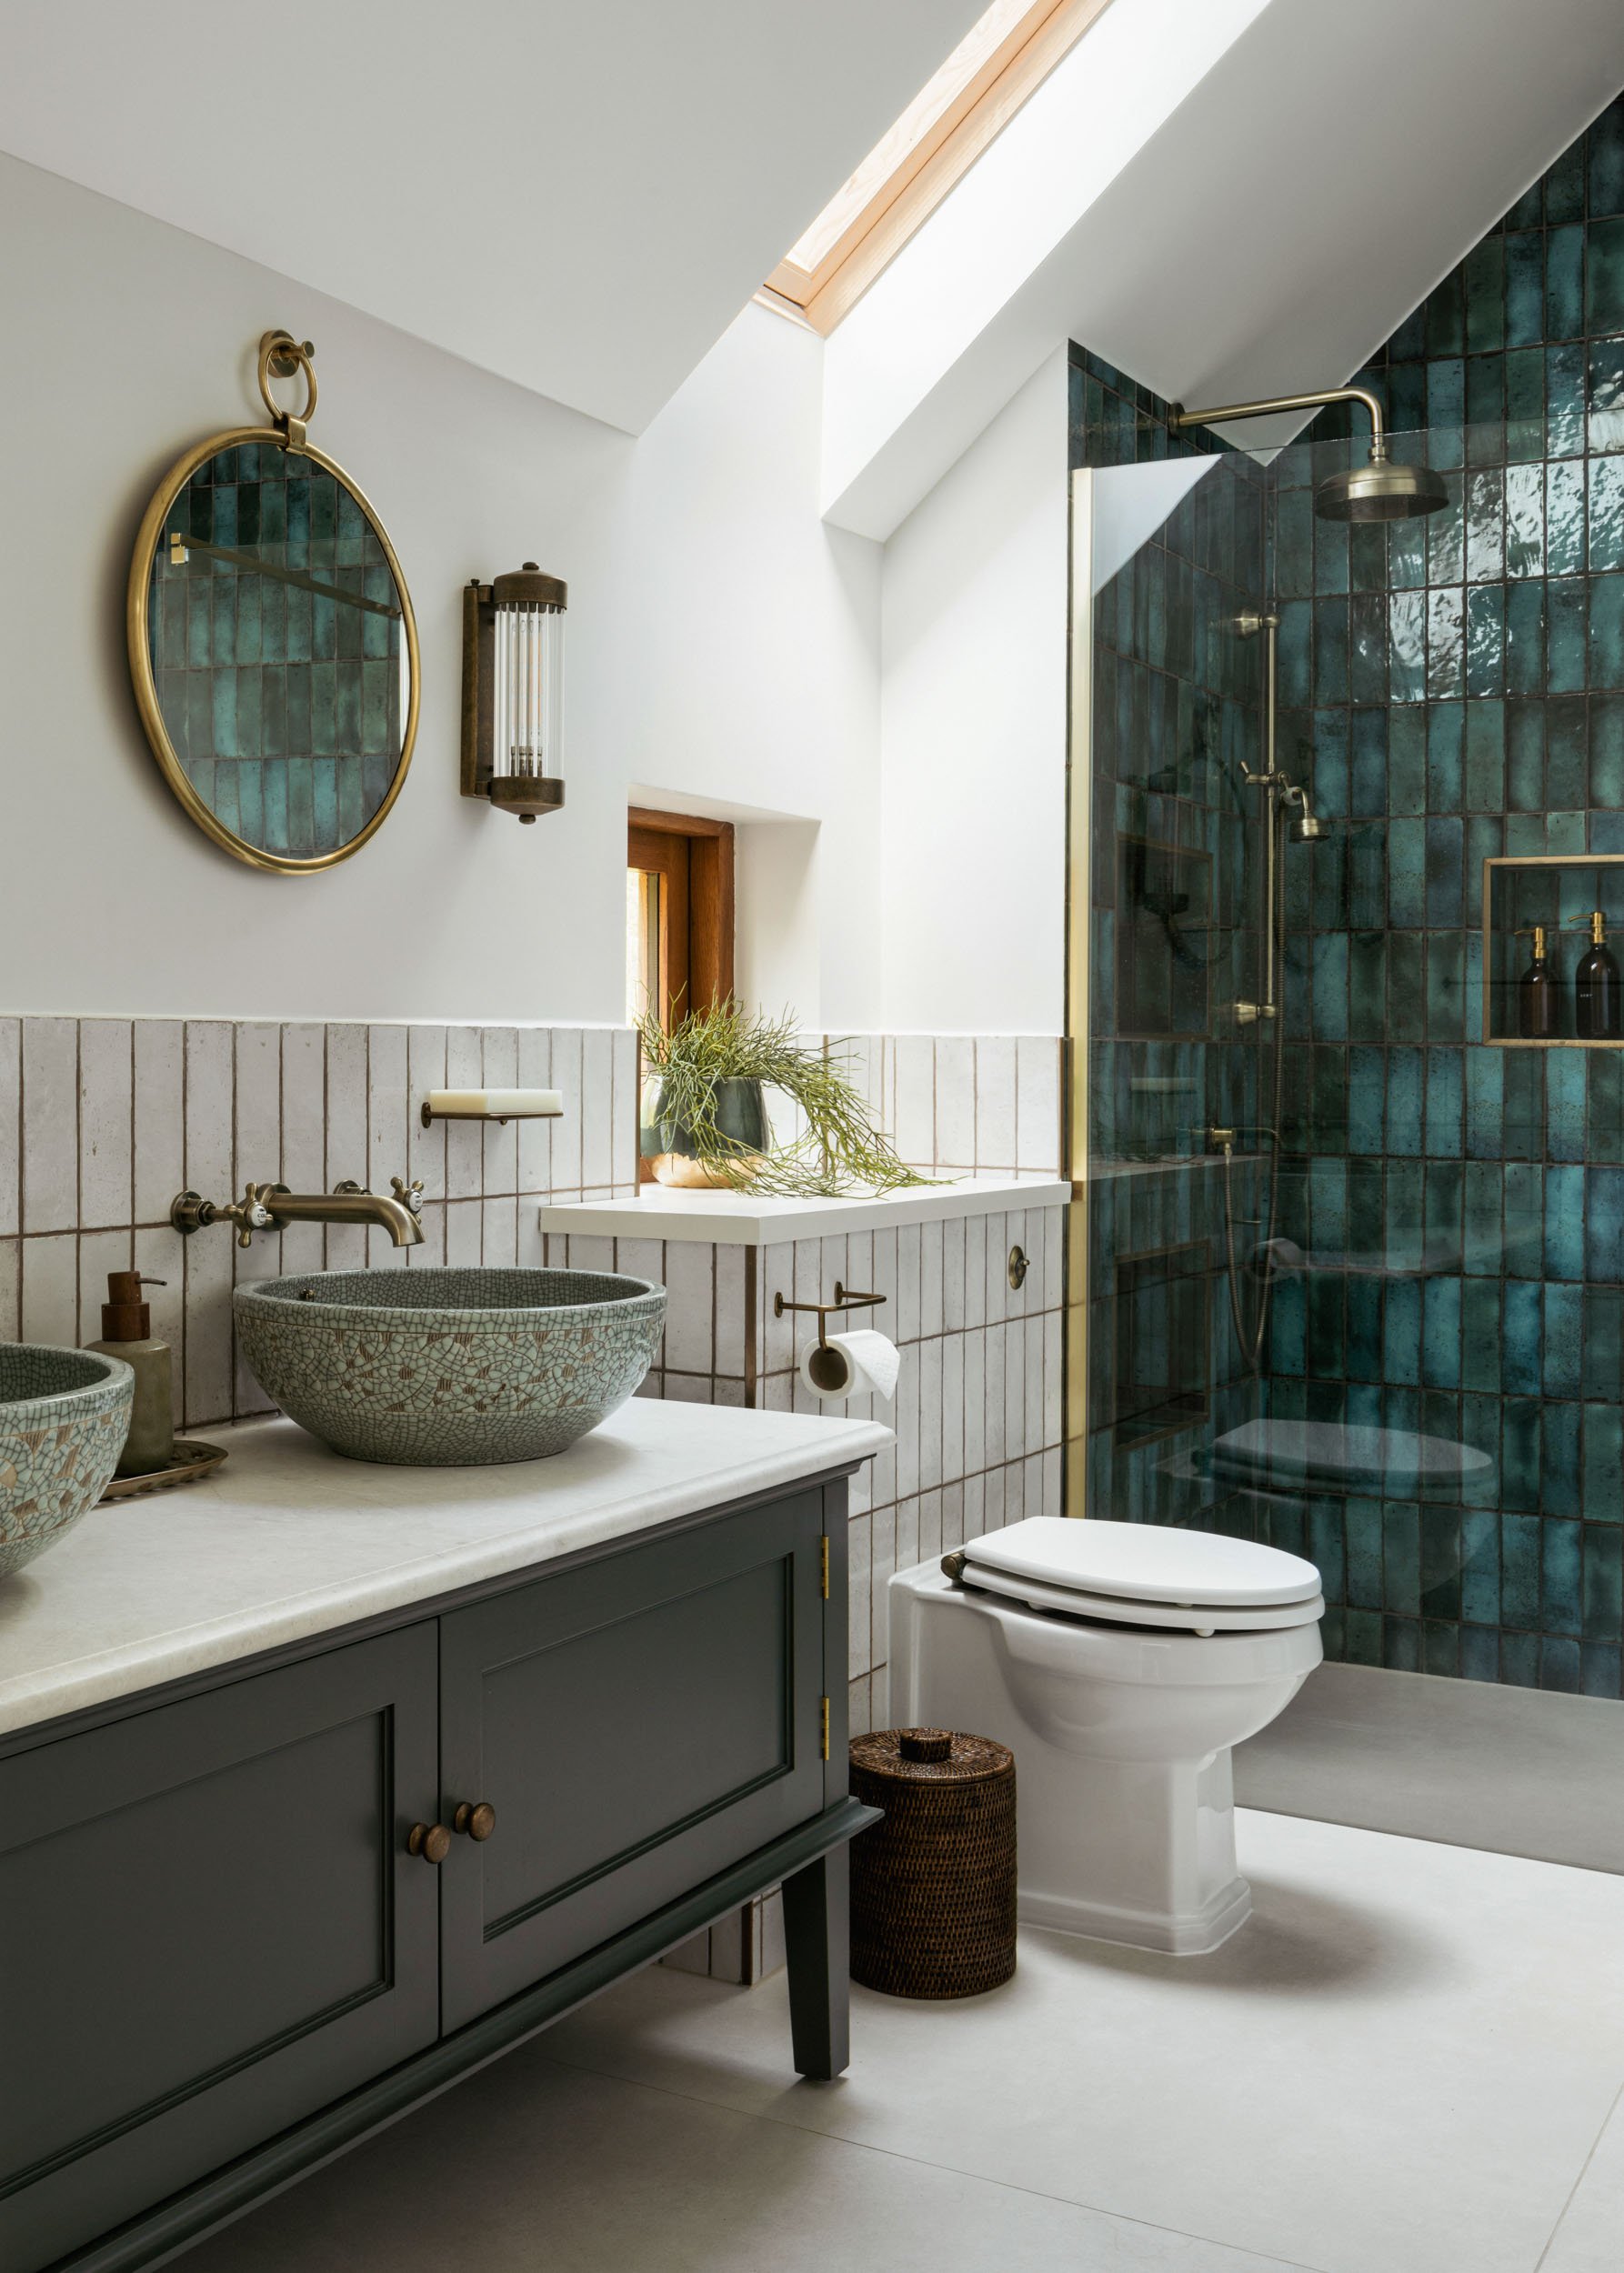 interior-design-country-side-bathroom-tiles.jpg